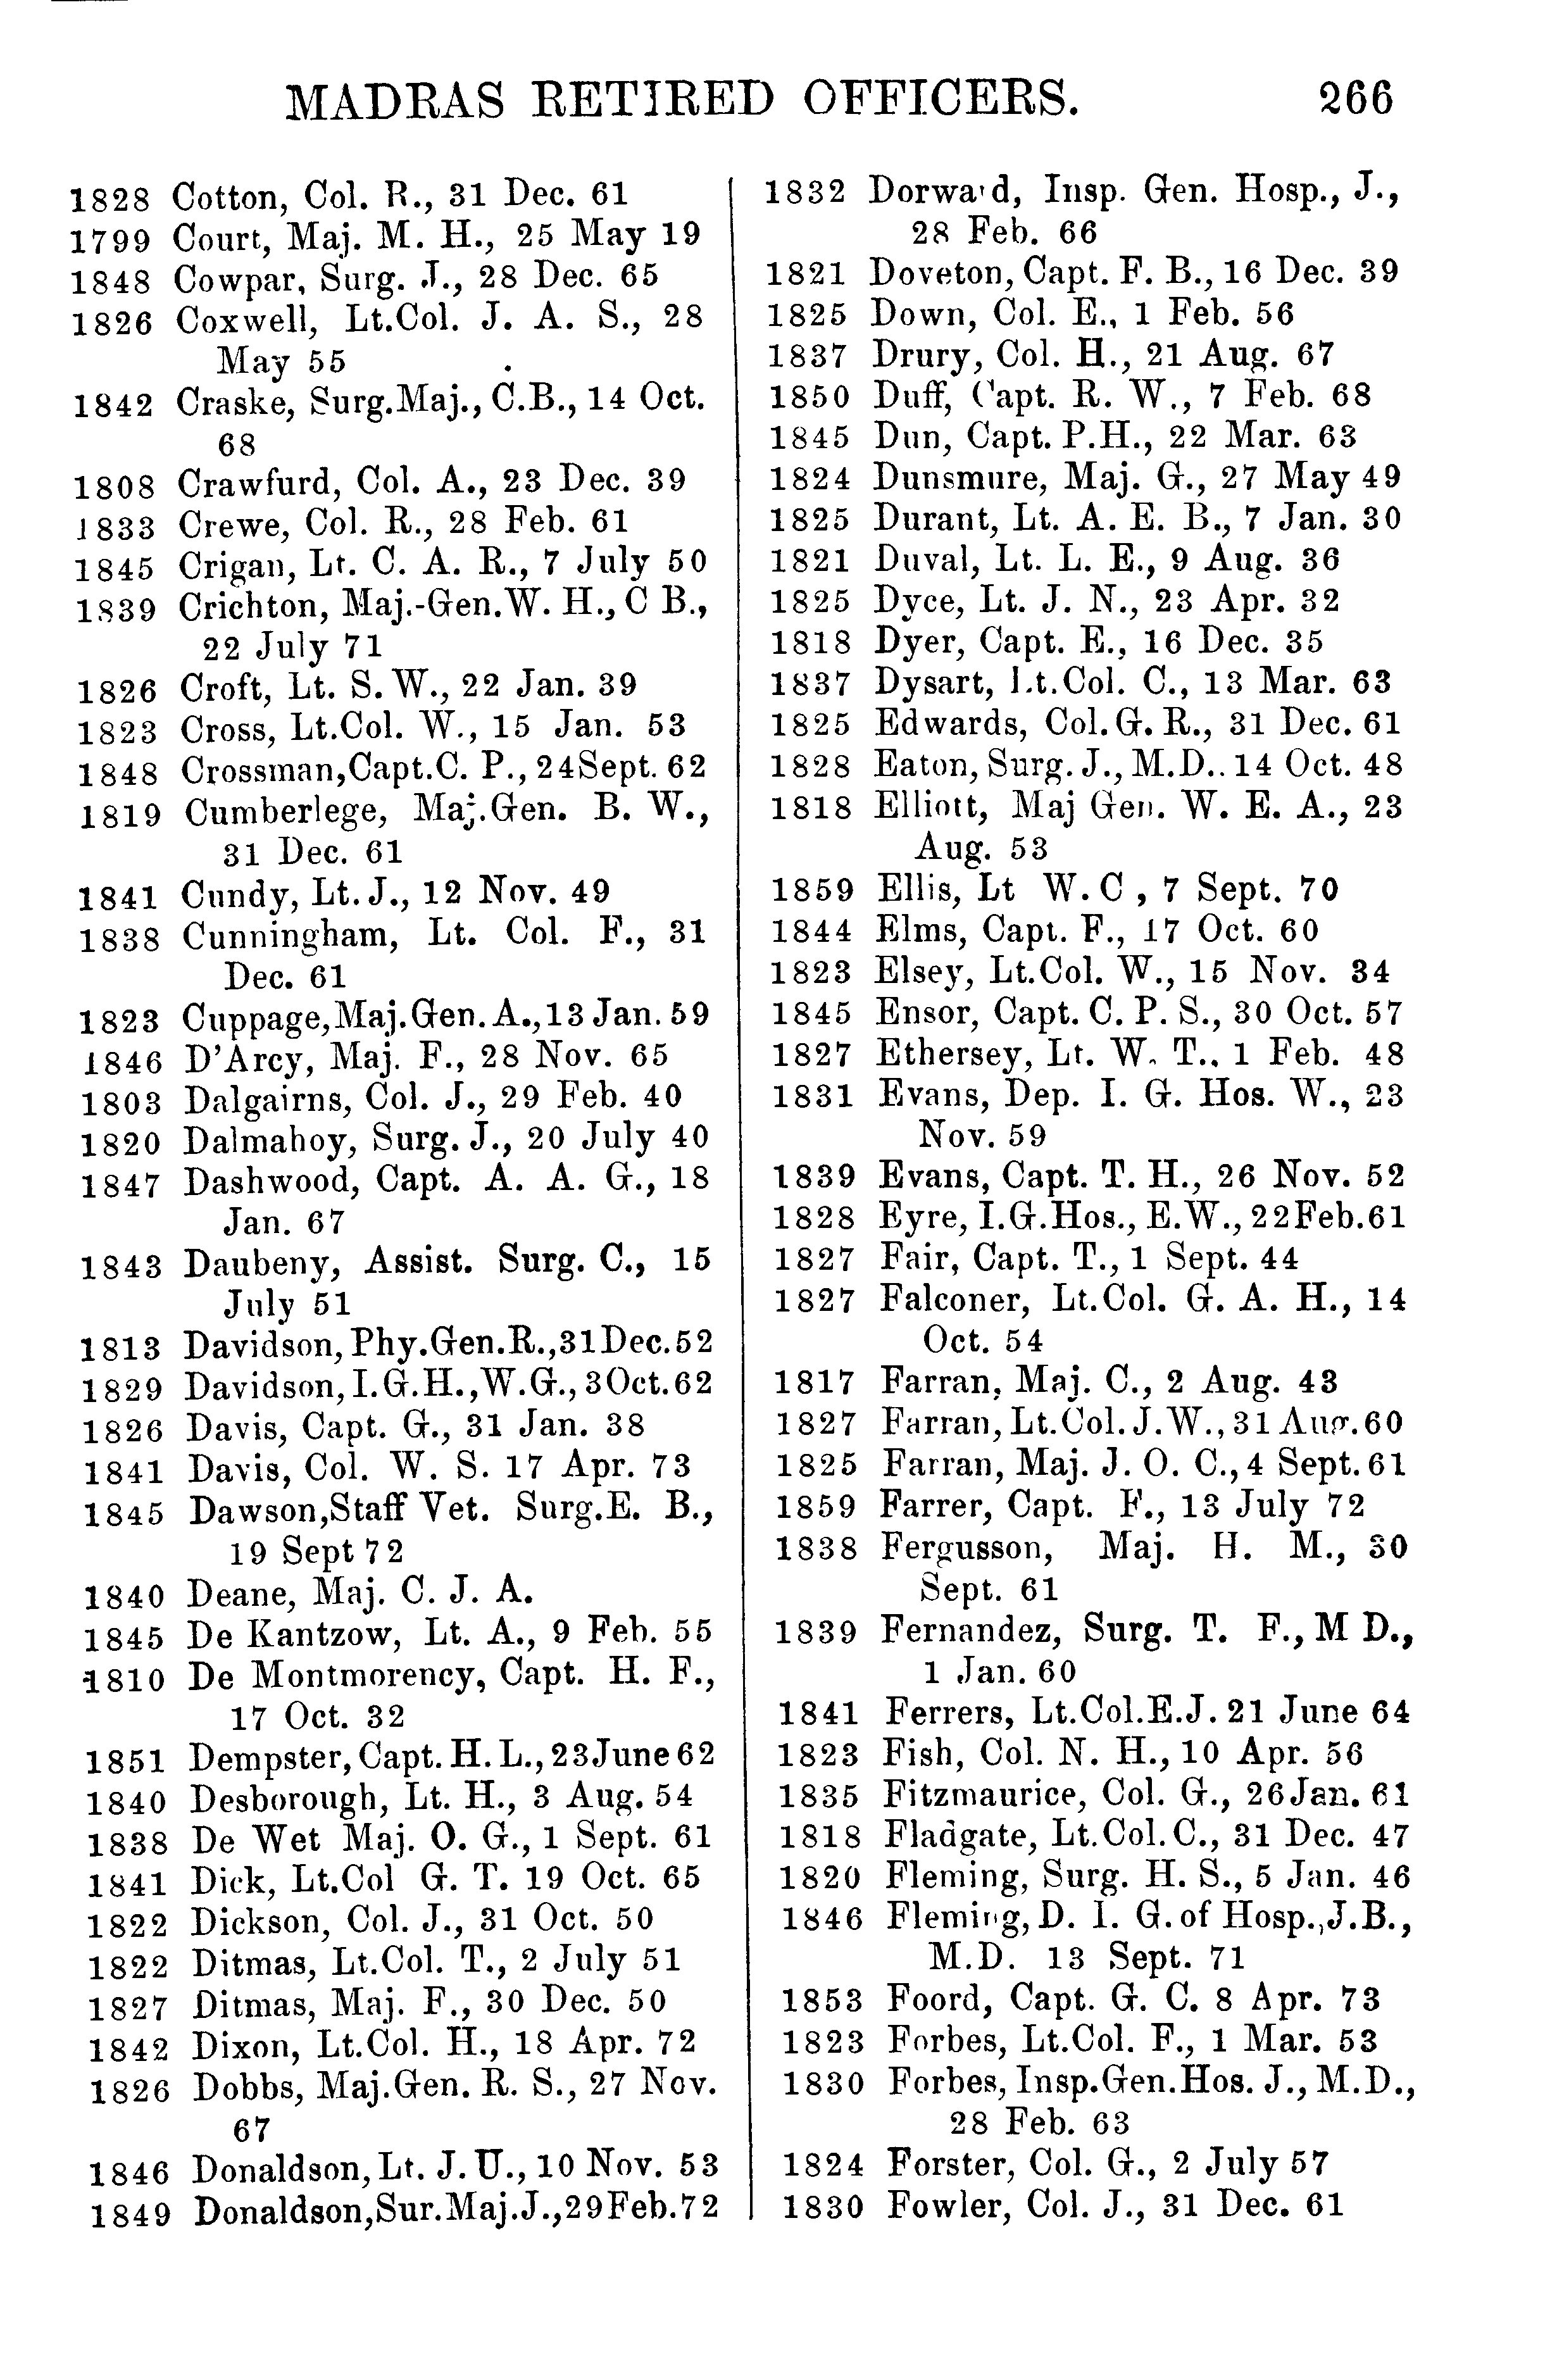 E B Dawson in 1873 list of Madras retired officers 